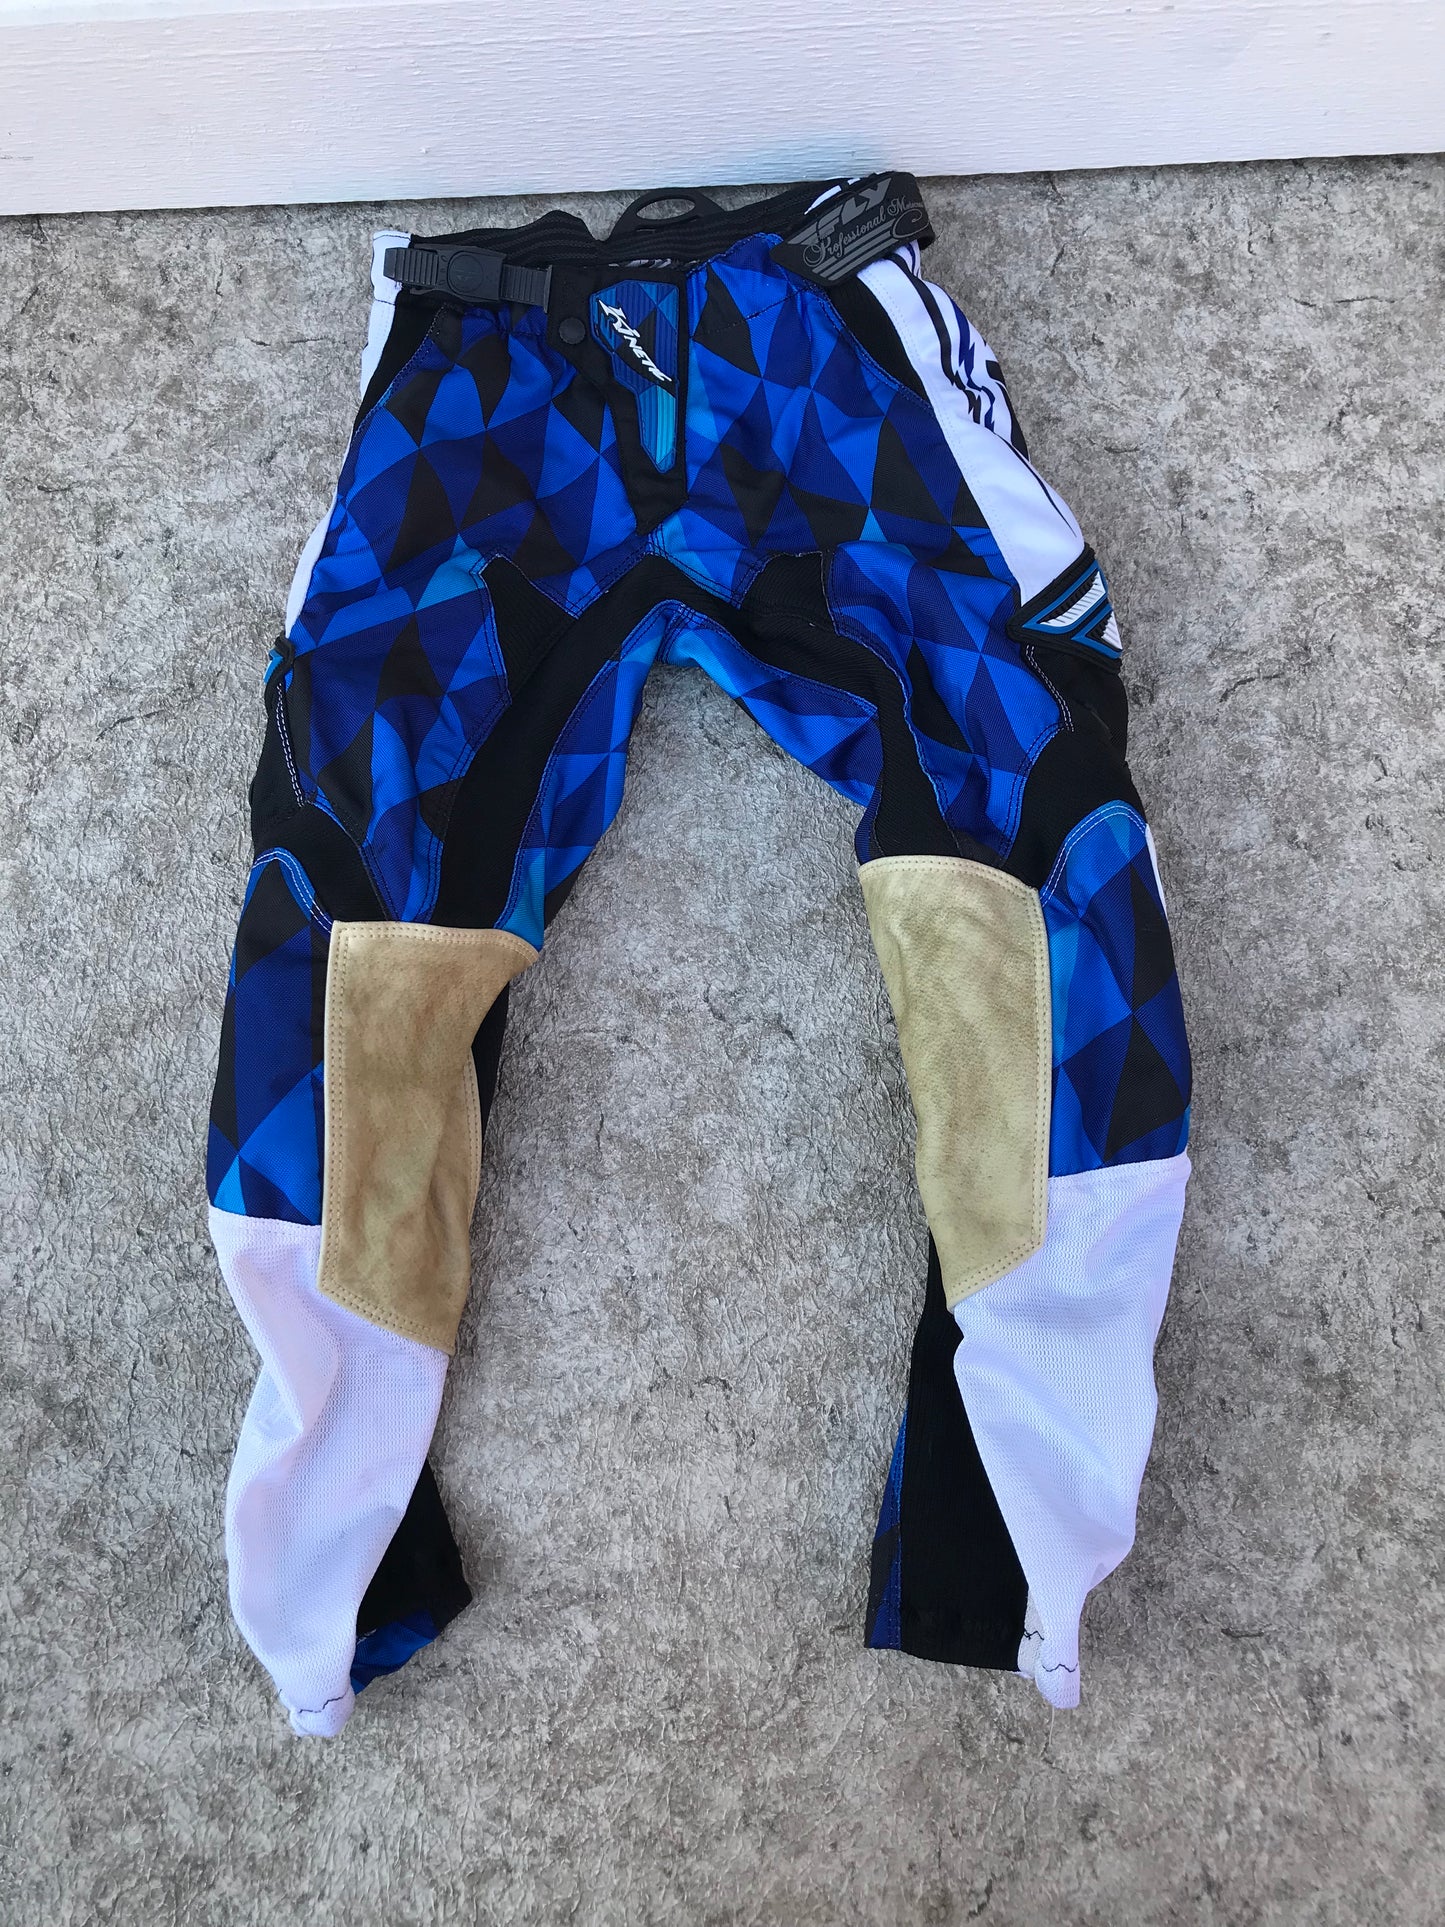 Motocross BMX Dirt Bike Child Size Junior 26 Inch Fly Racing Pants Blue Minor Wear PT 3440